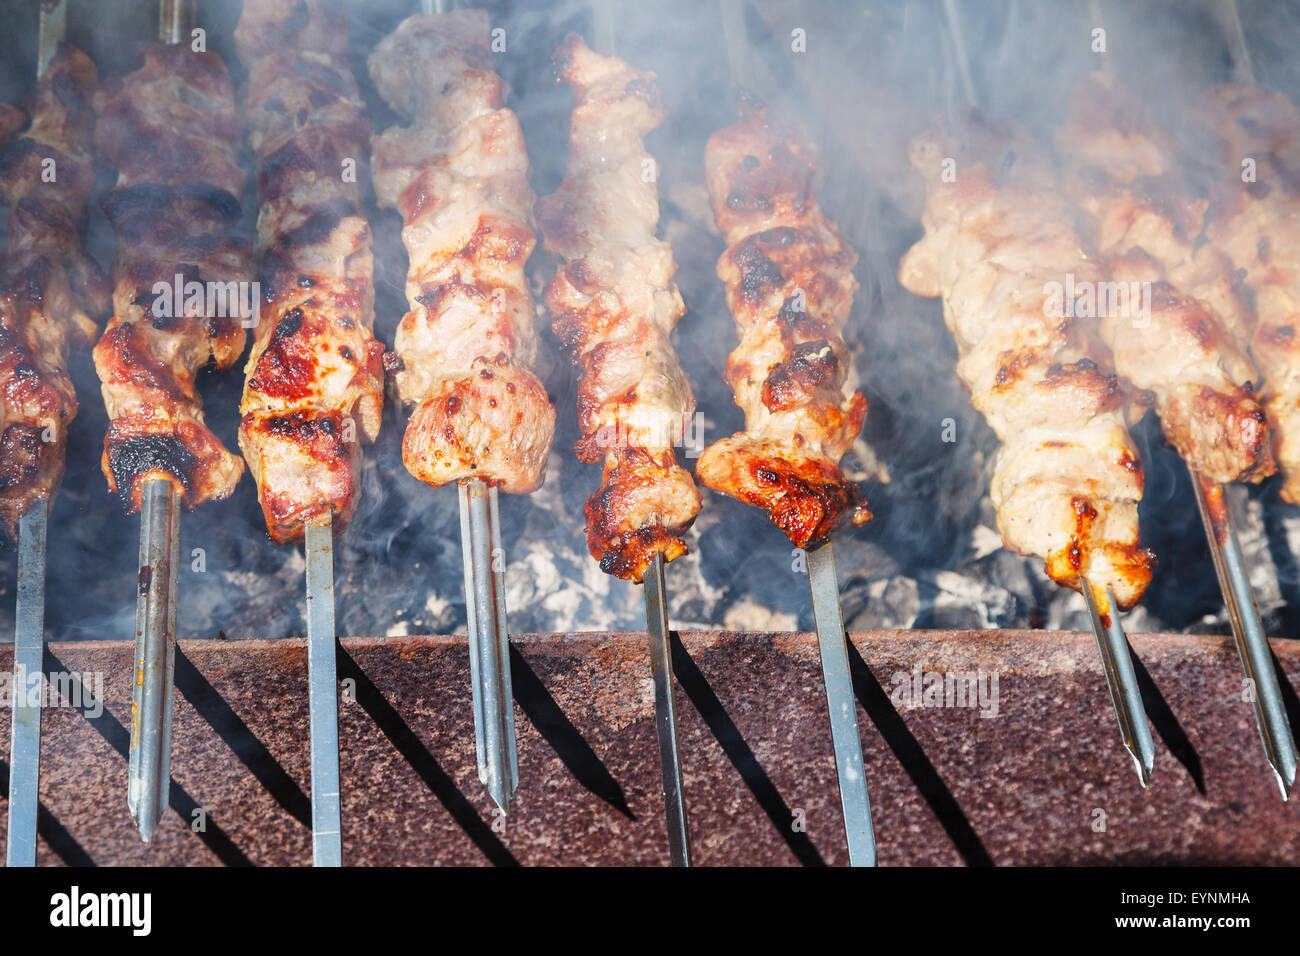 many shish kebab skewers preparing on outdoor grill Stock Photo